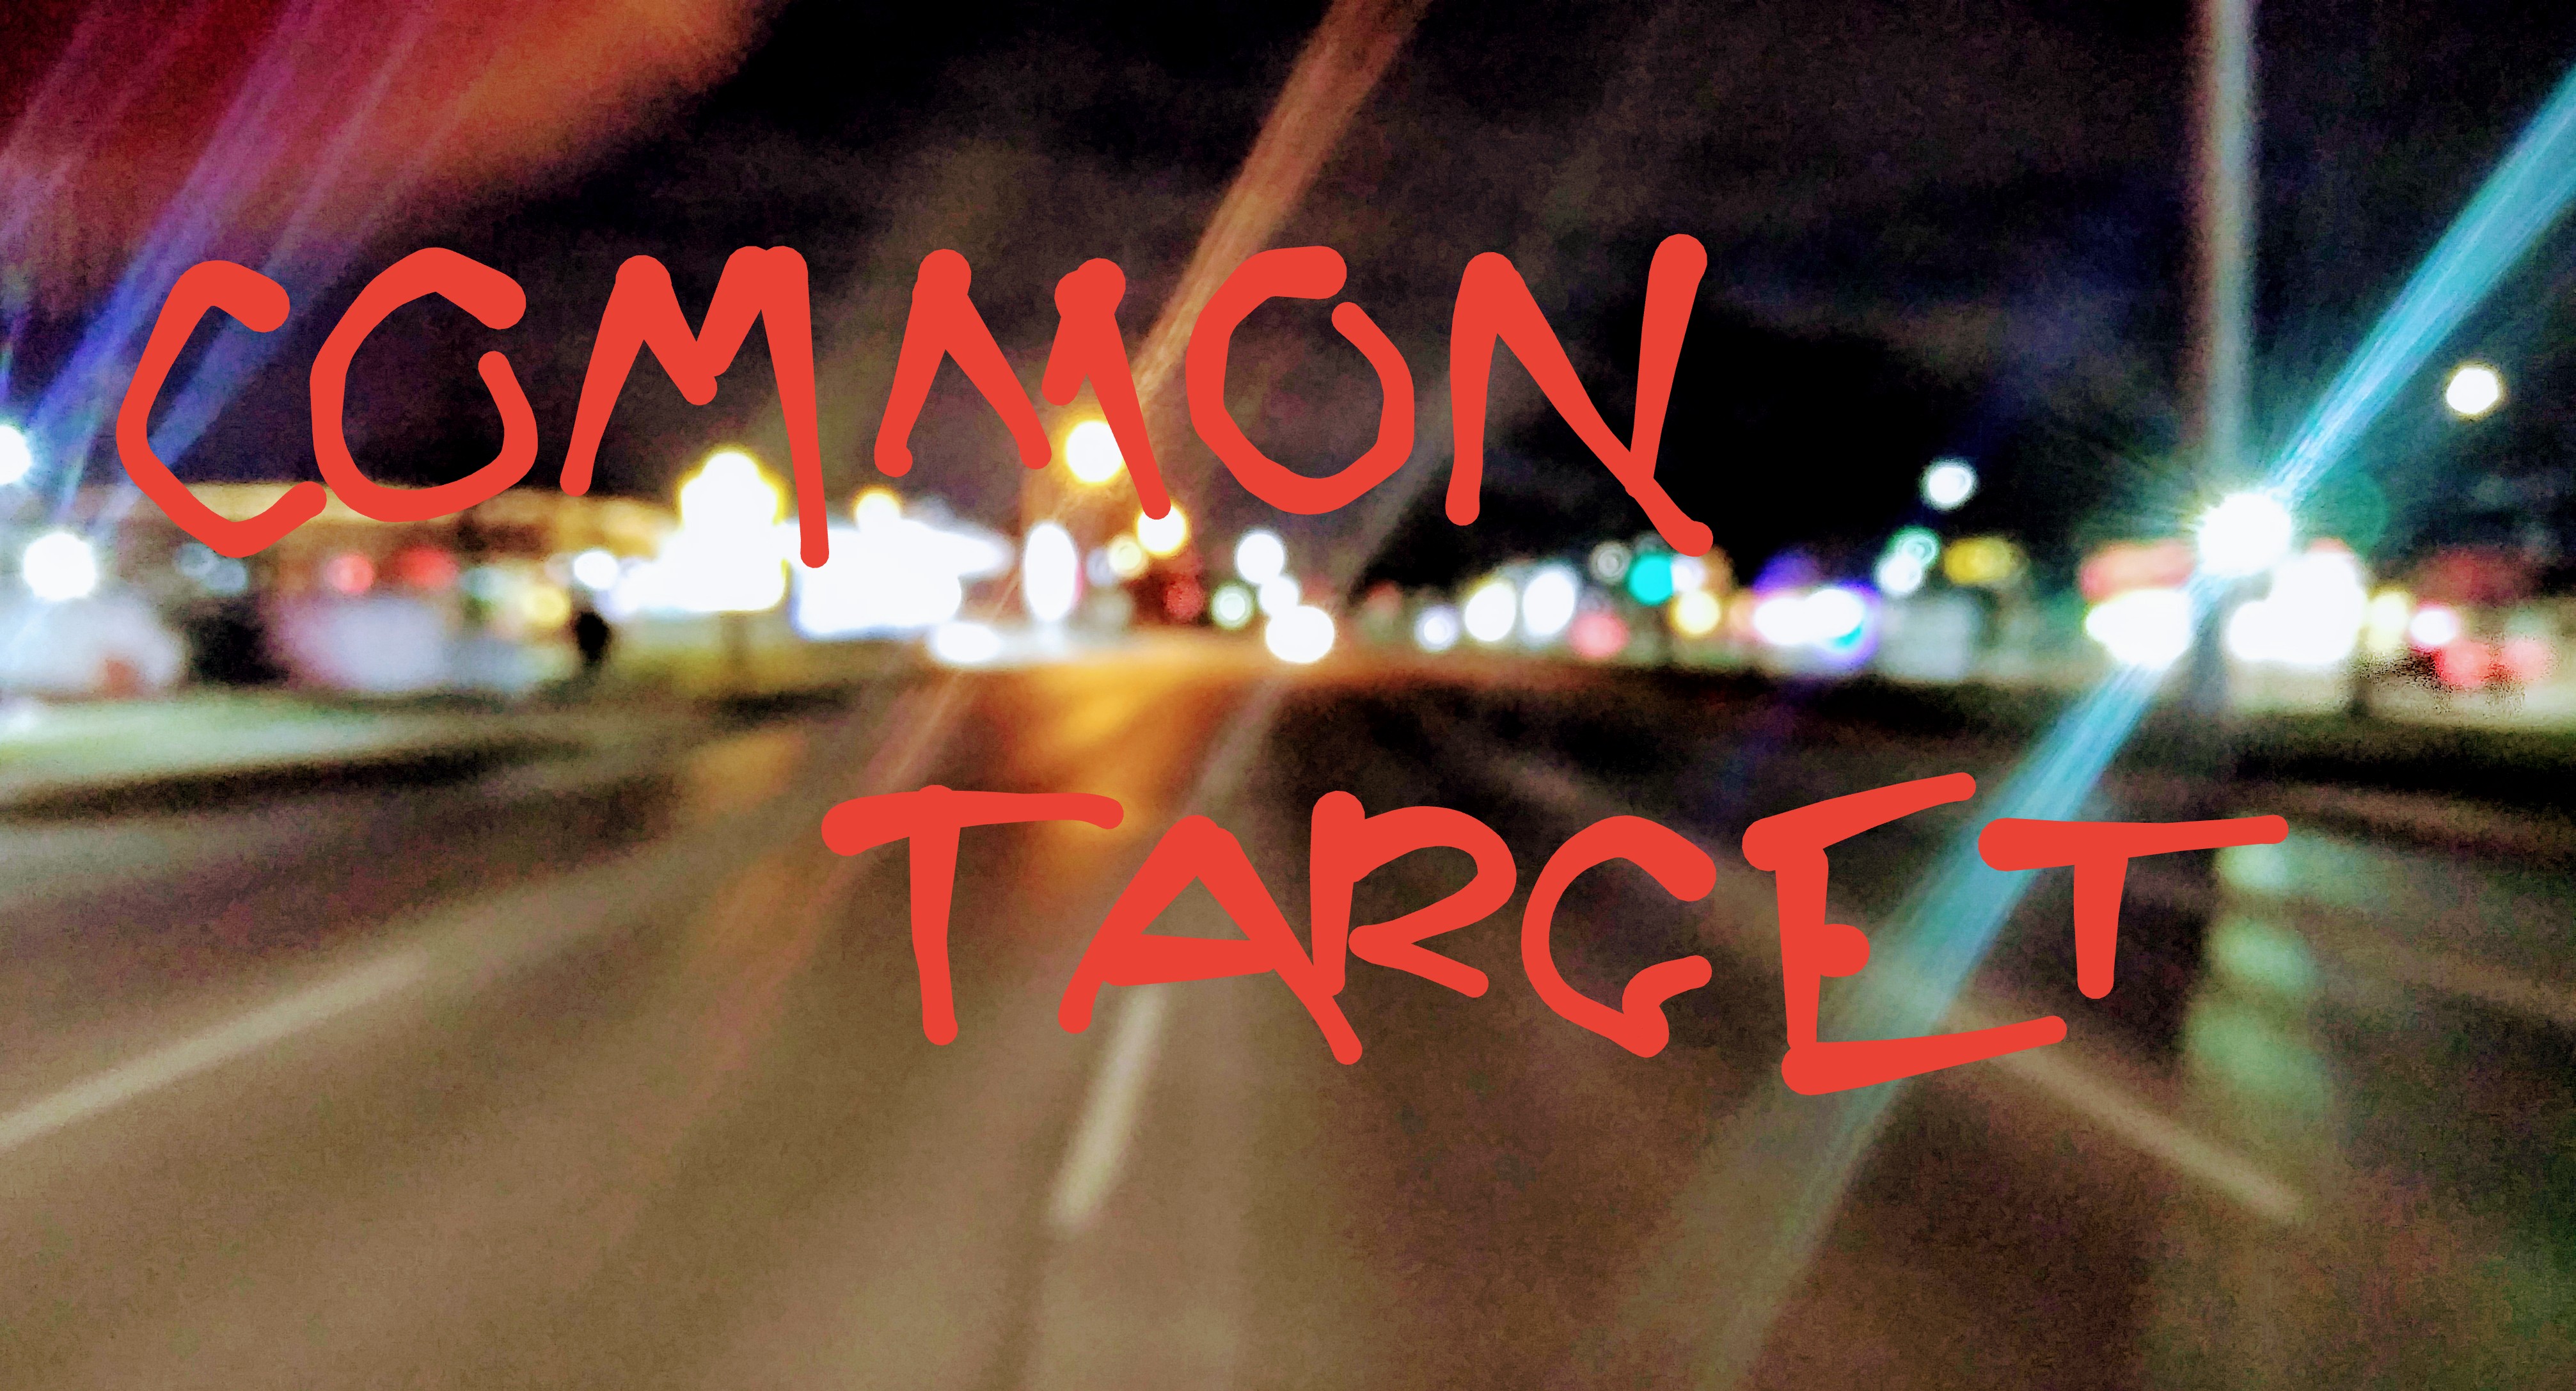 Common_Target_dsgn.jpg